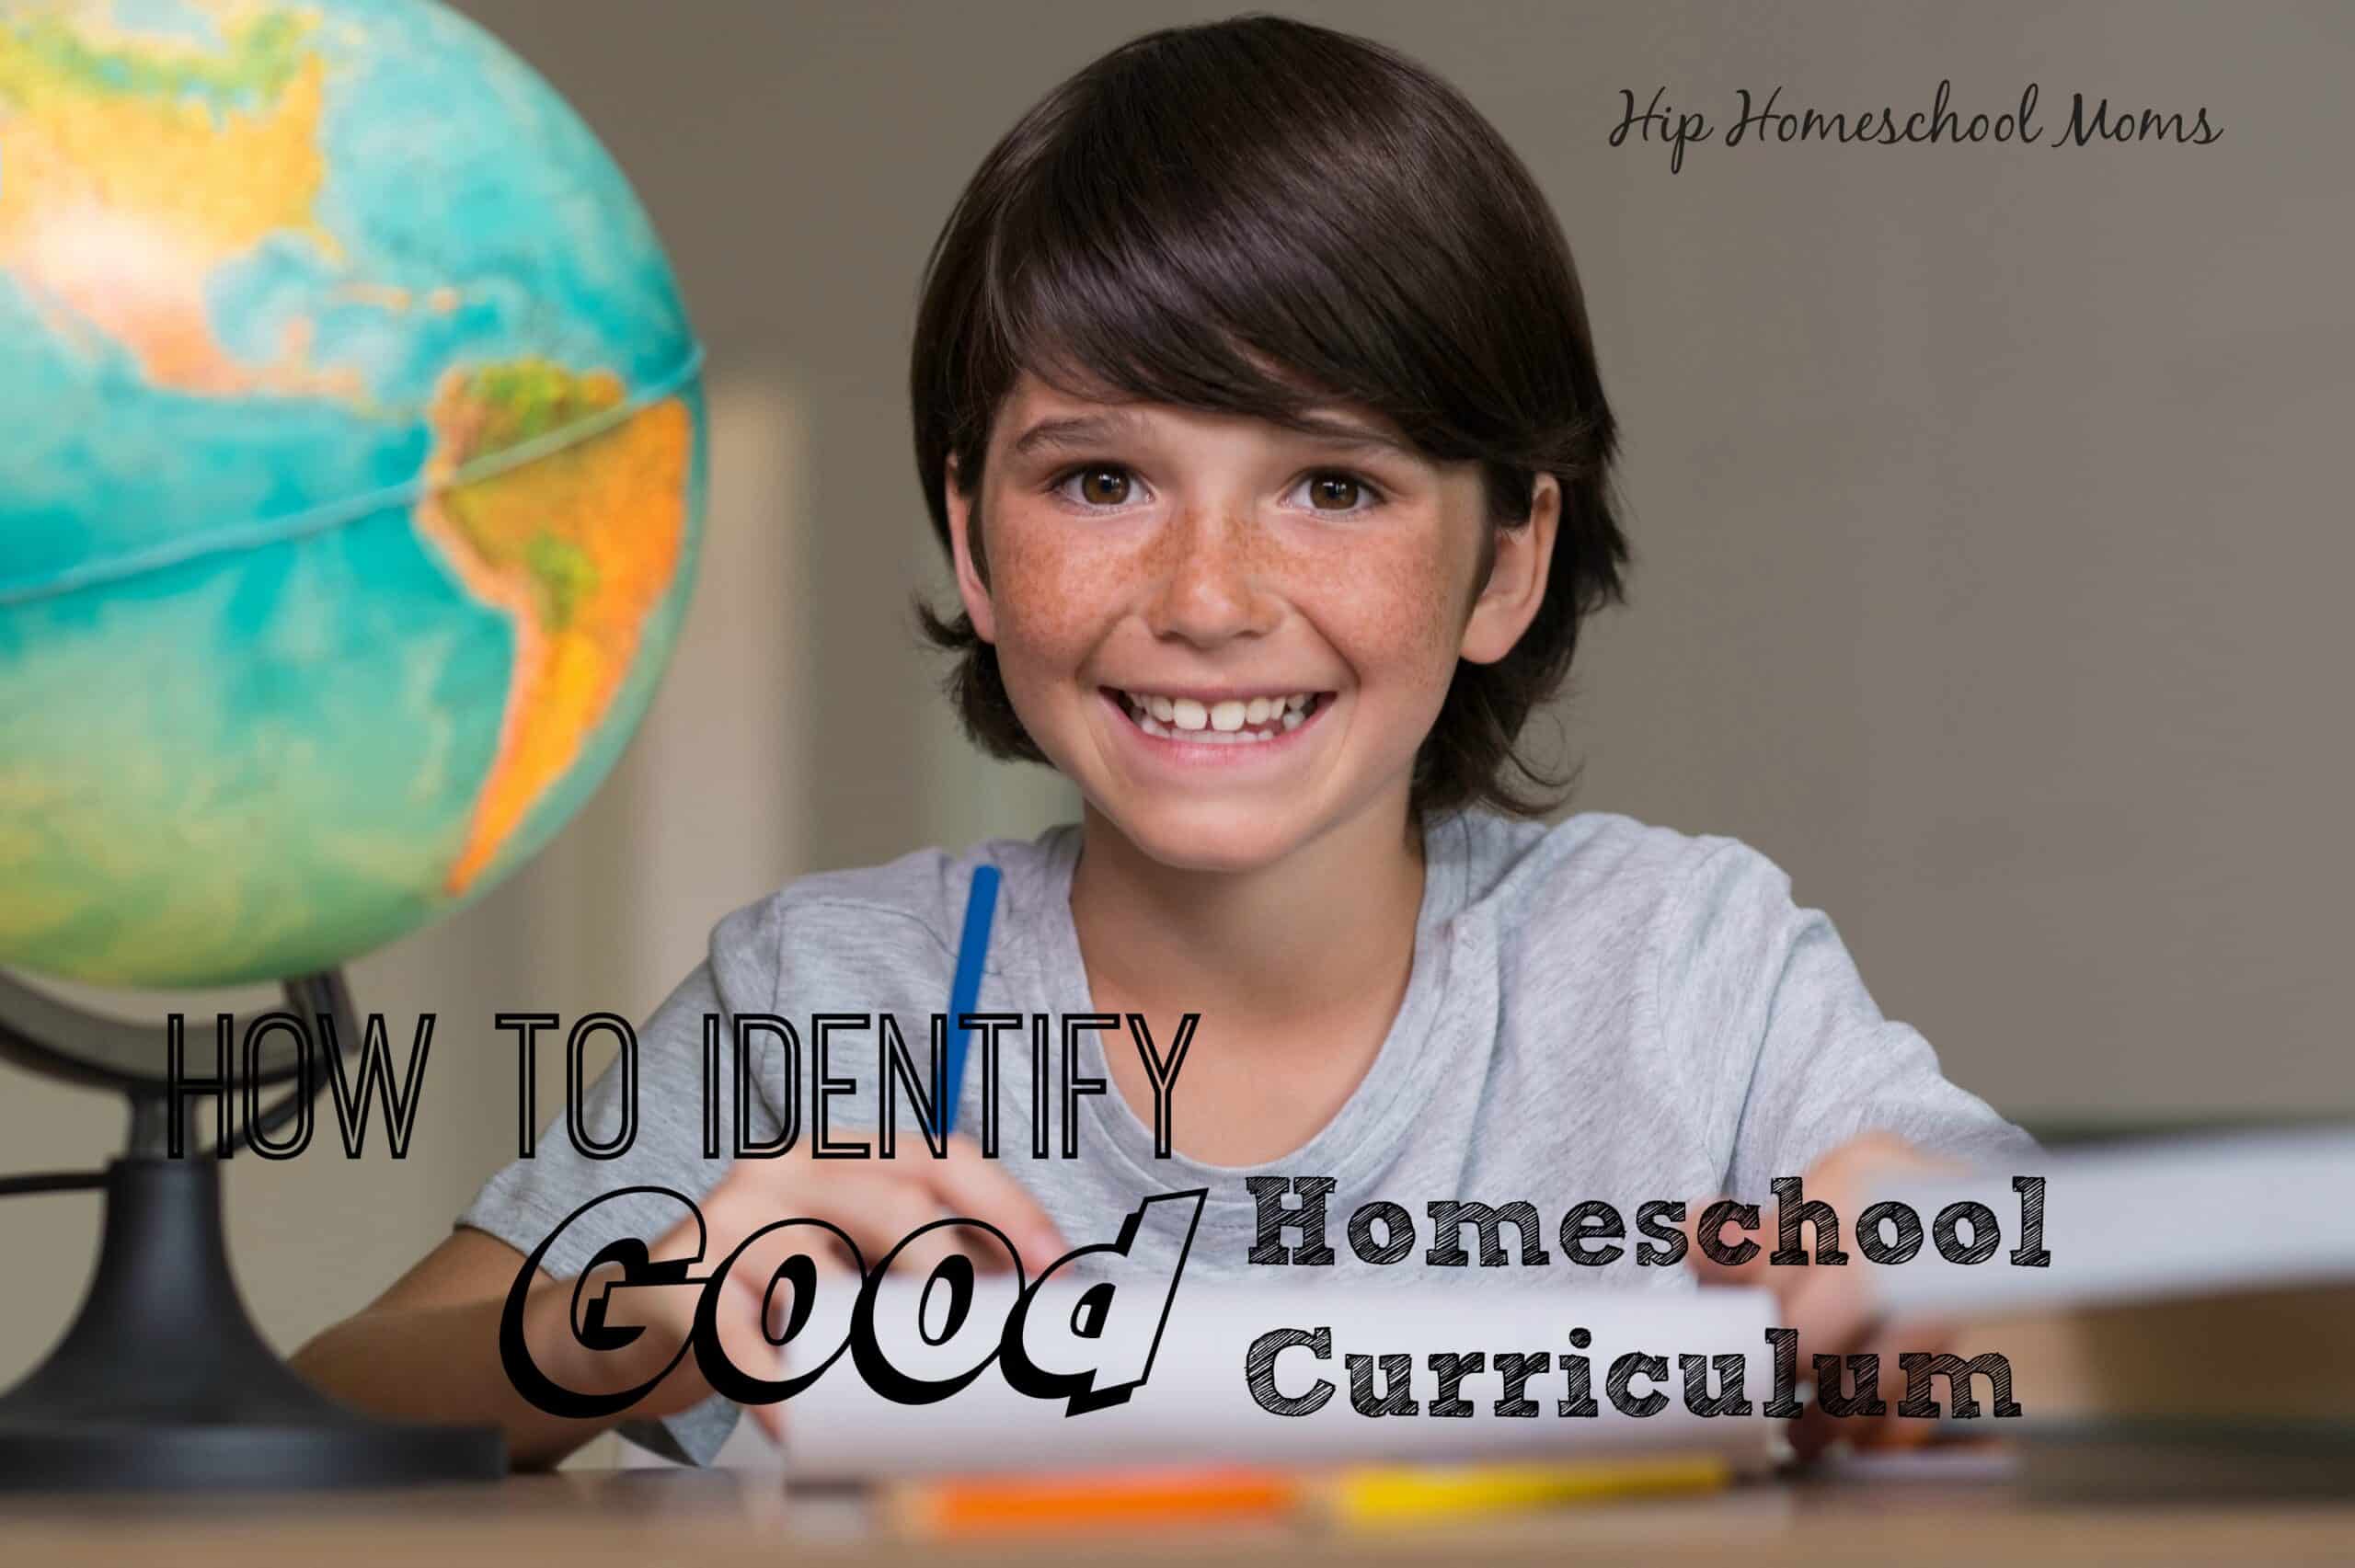 How to Identify Good Homeschool Curriculum